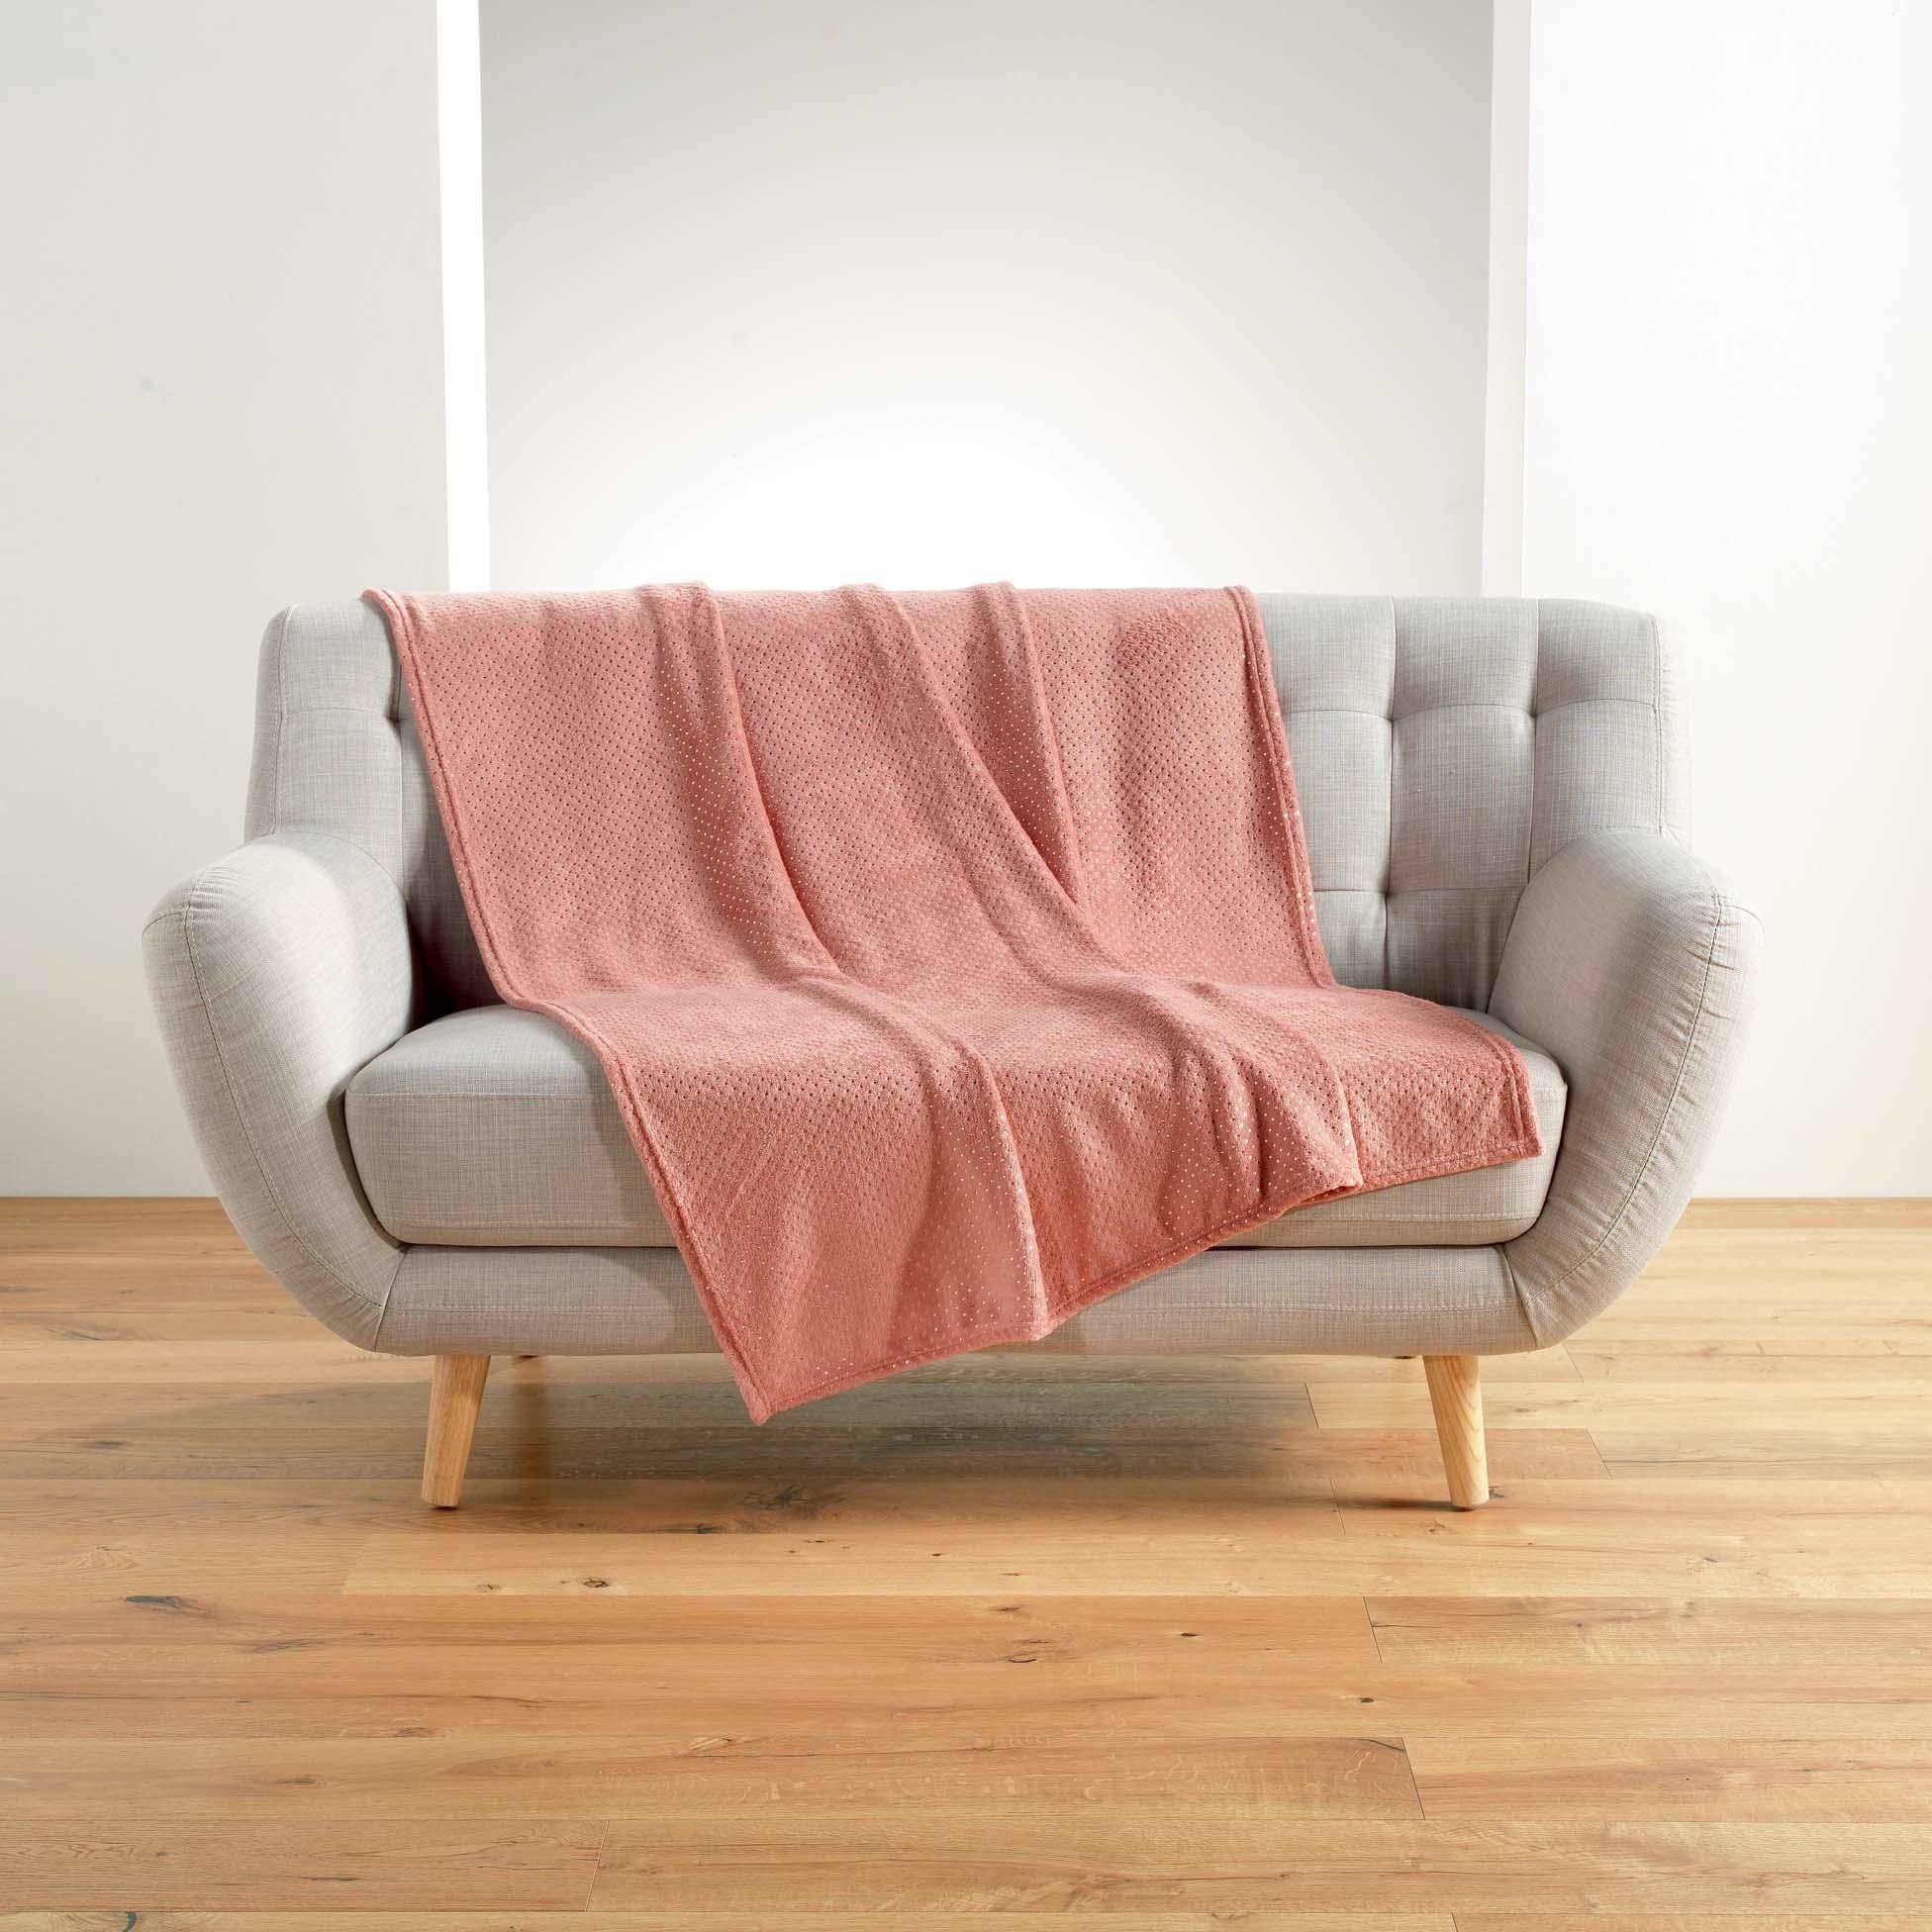 Douceur d\'intérieur Přehoz přes postel, růžová barva, 125 x 150 cm, MAZARINE - EMAKO.CZ s.r.o.